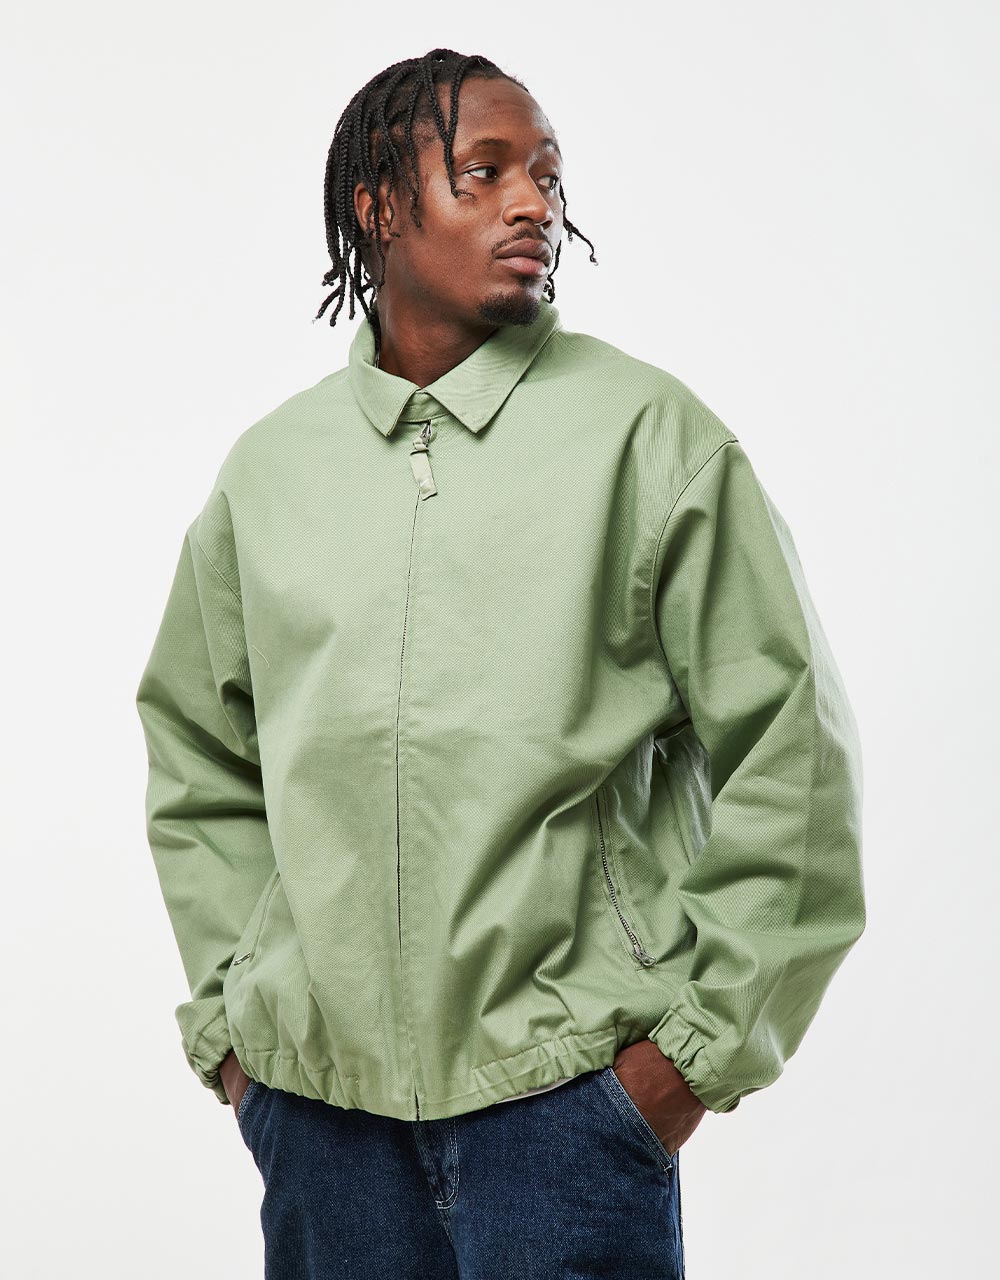 Nike SB Woven Twill Premium Jacket - Oil Green